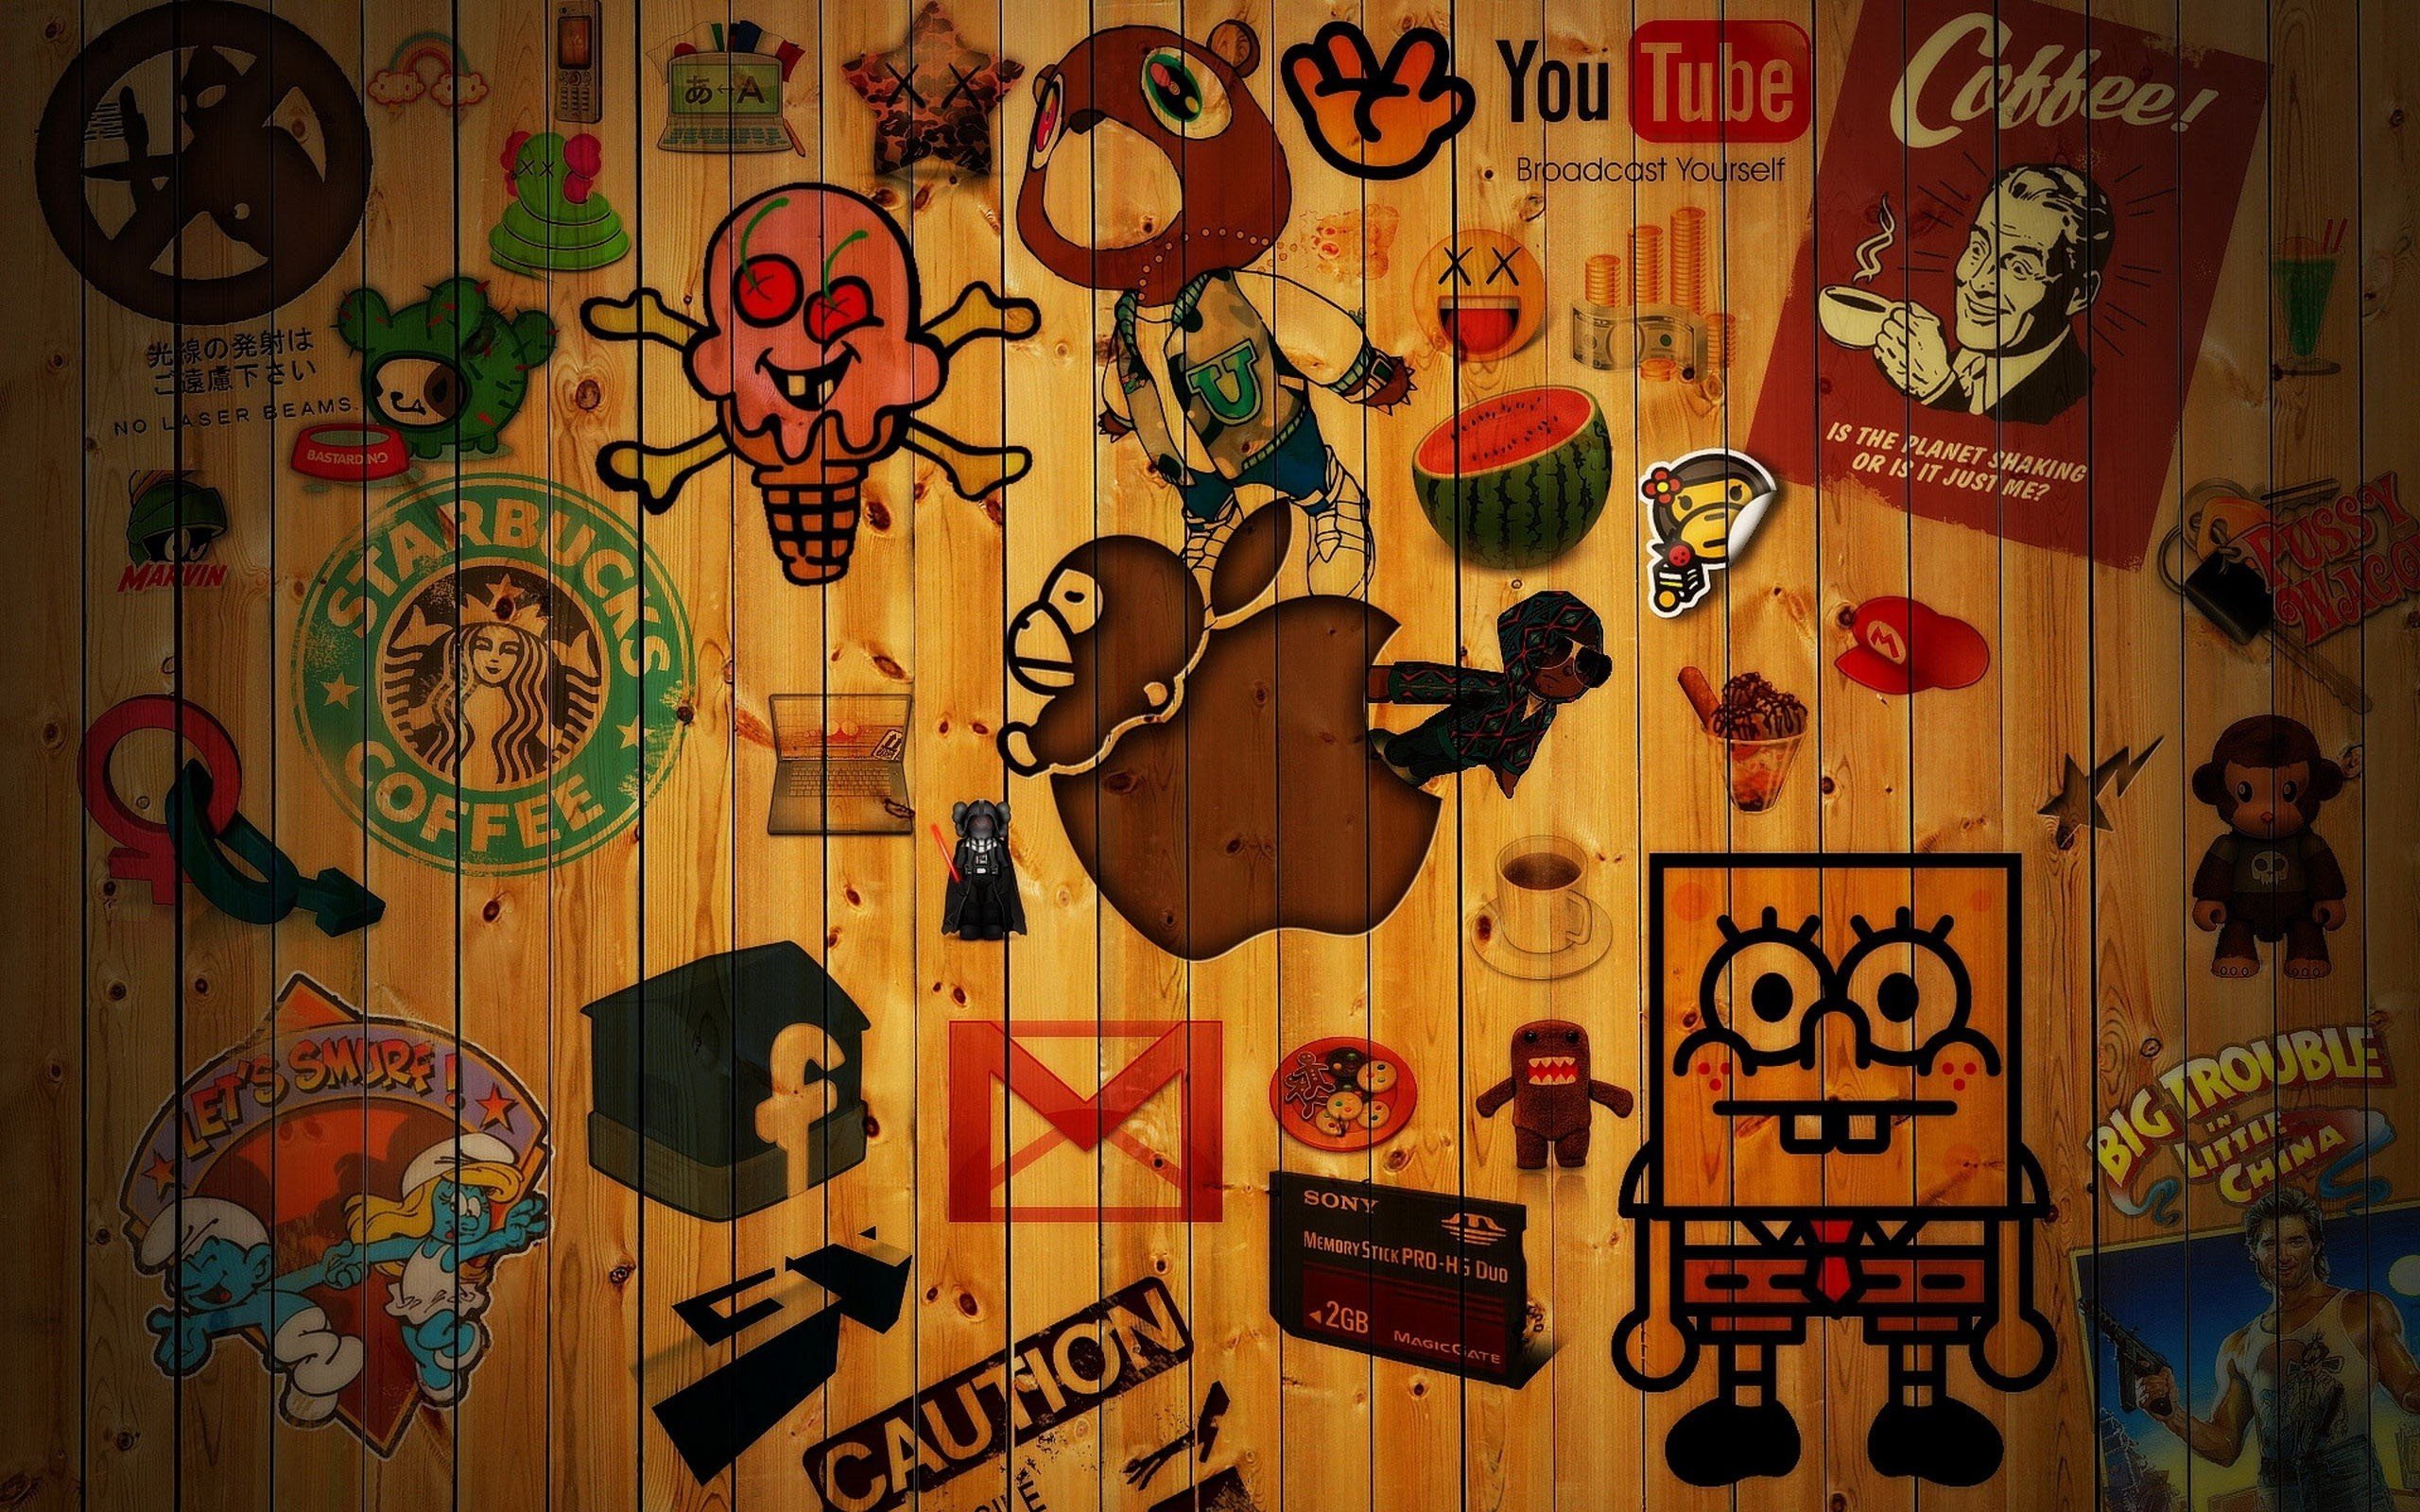 logo, Symbols, SpongeBob SquarePants, Smurfs, Facebook, Google, Sony, YouTube, Super Mario Wallpaper